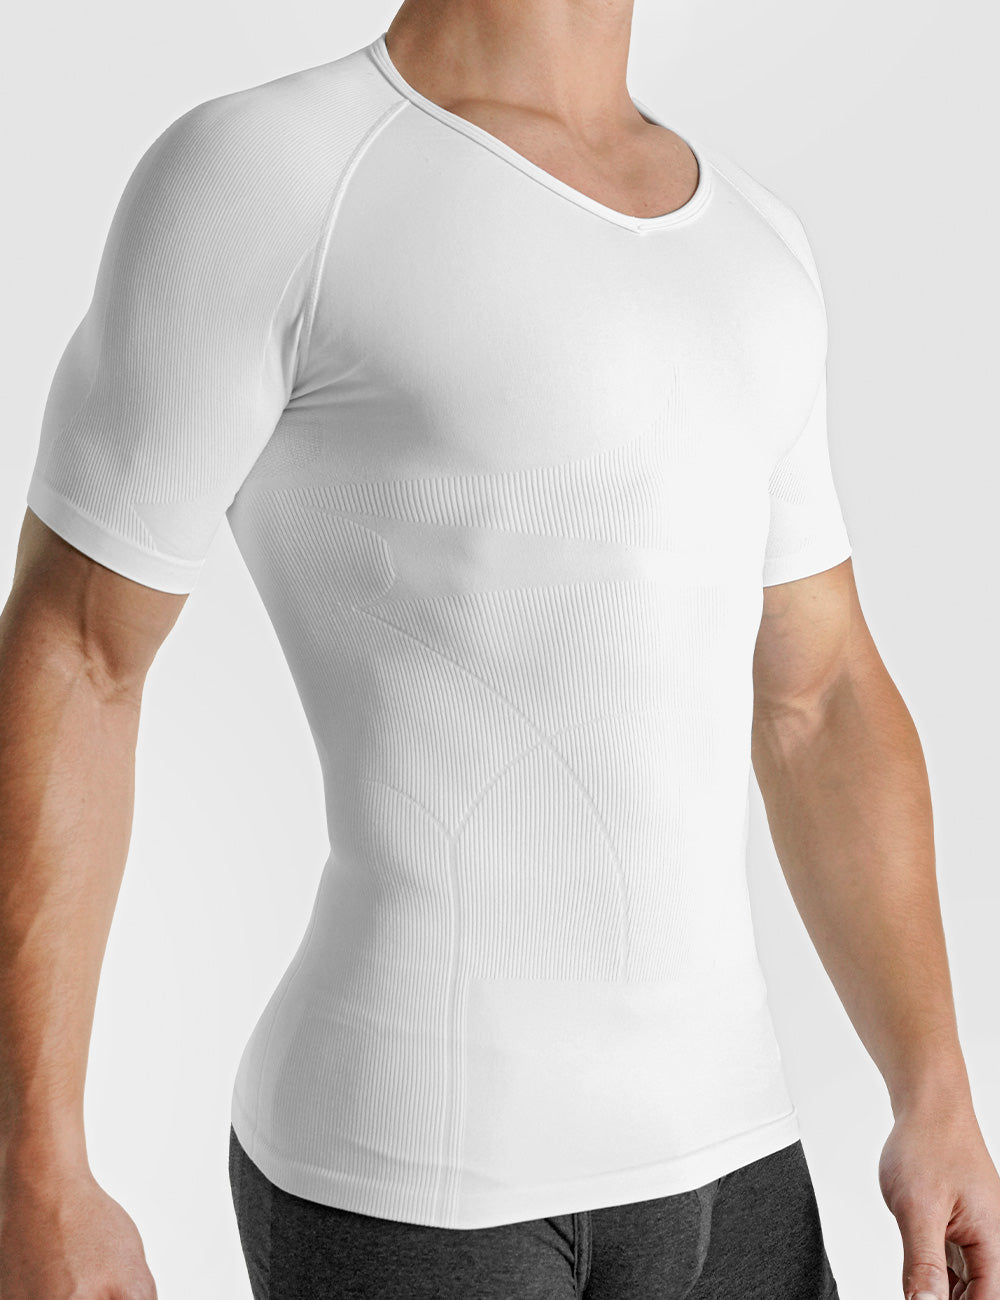 Rounderbum Seamless Compression T-Shirt - Underwear Expert